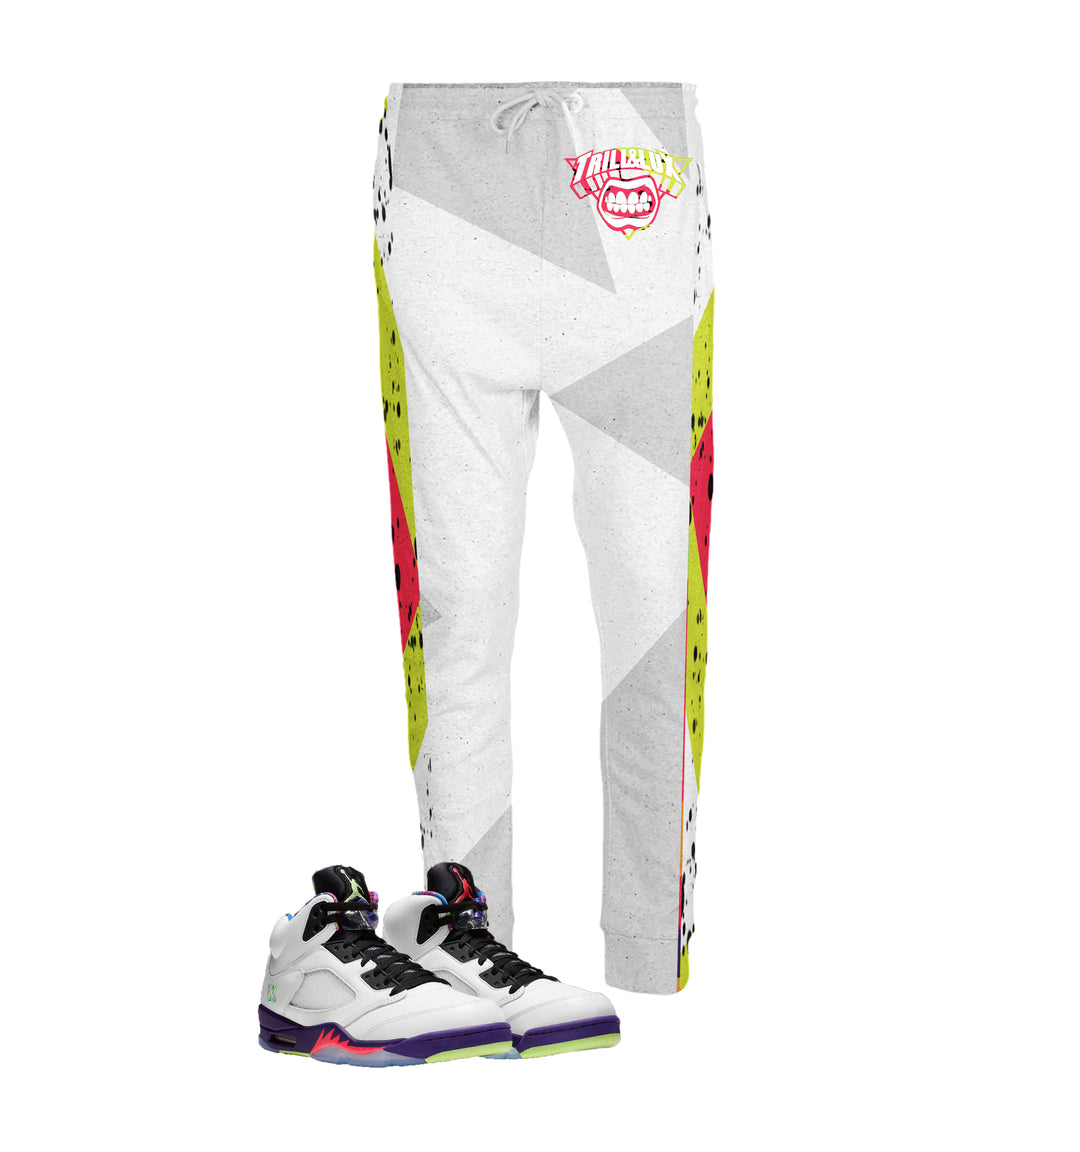 Trill & Lux | Jordan 5 Ghost Green Inspired Jogger and Hoodie Suit | Retro Jordan 5